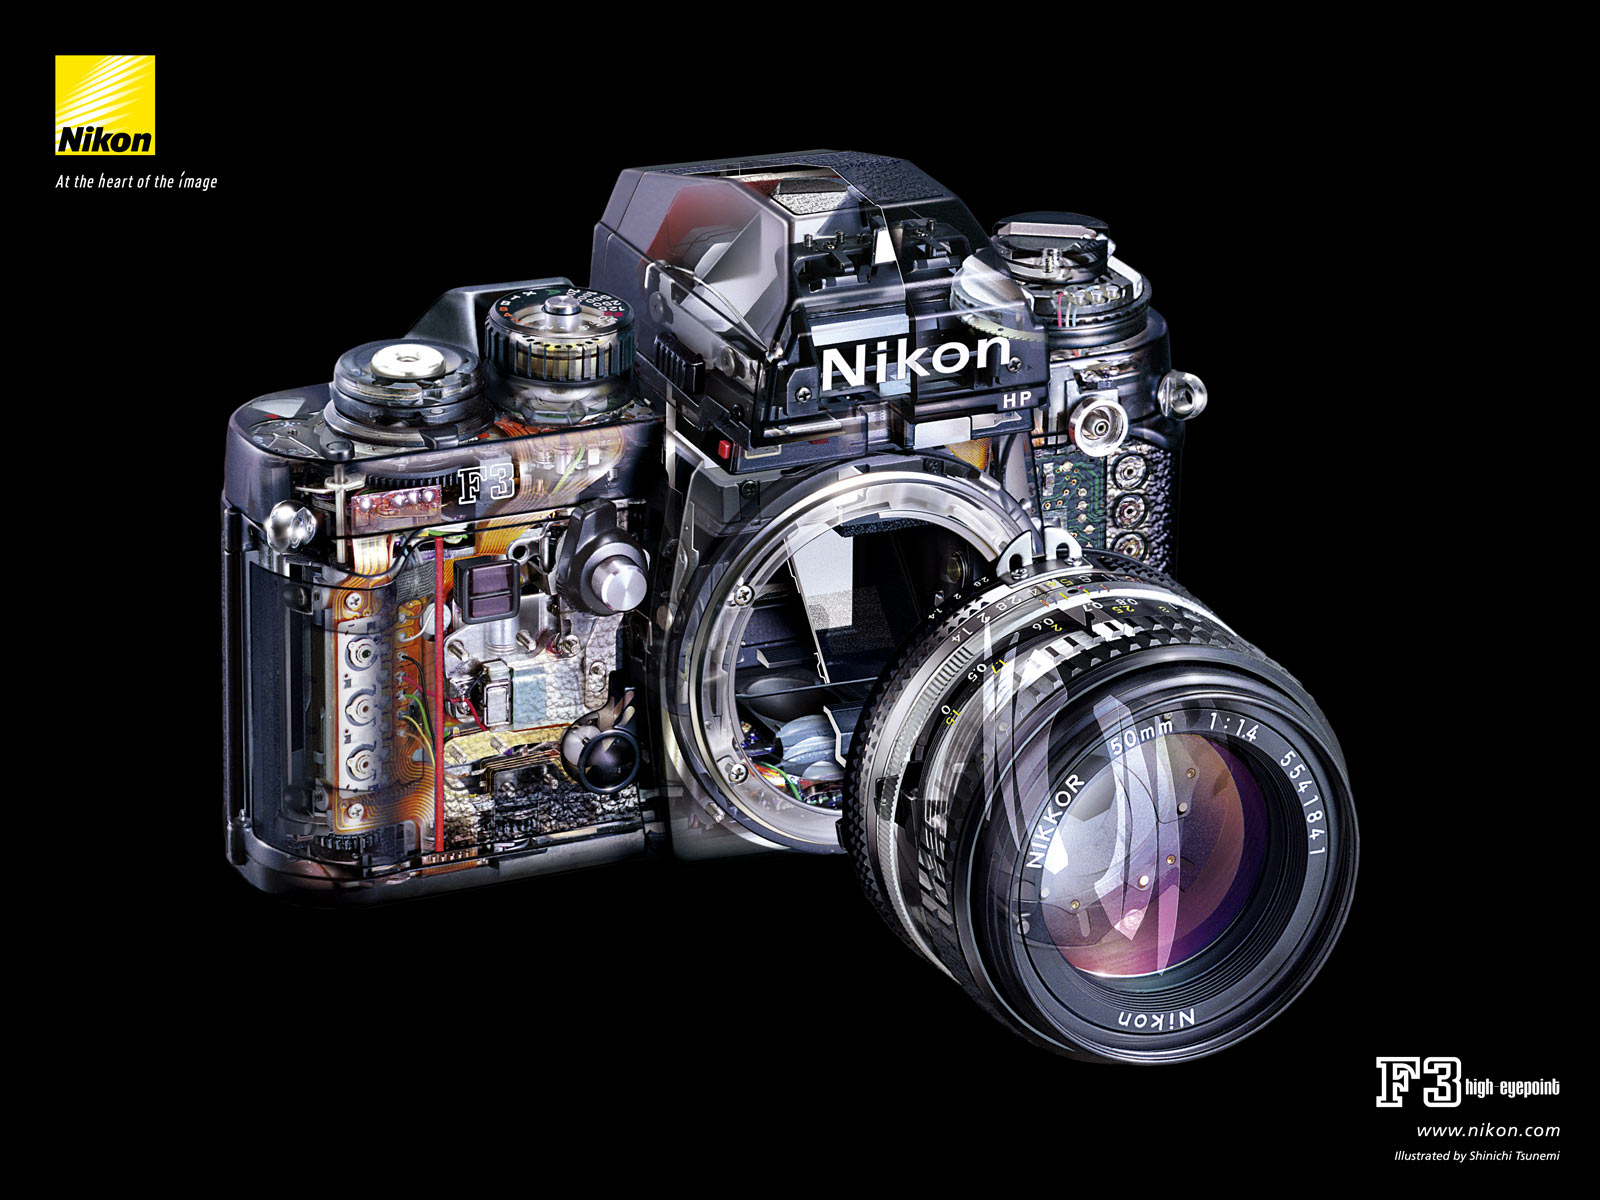 nikon壁紙hd,カメラ,レフレックスカメラ,デジタルカメラ,一眼レフカメラ,レンズ